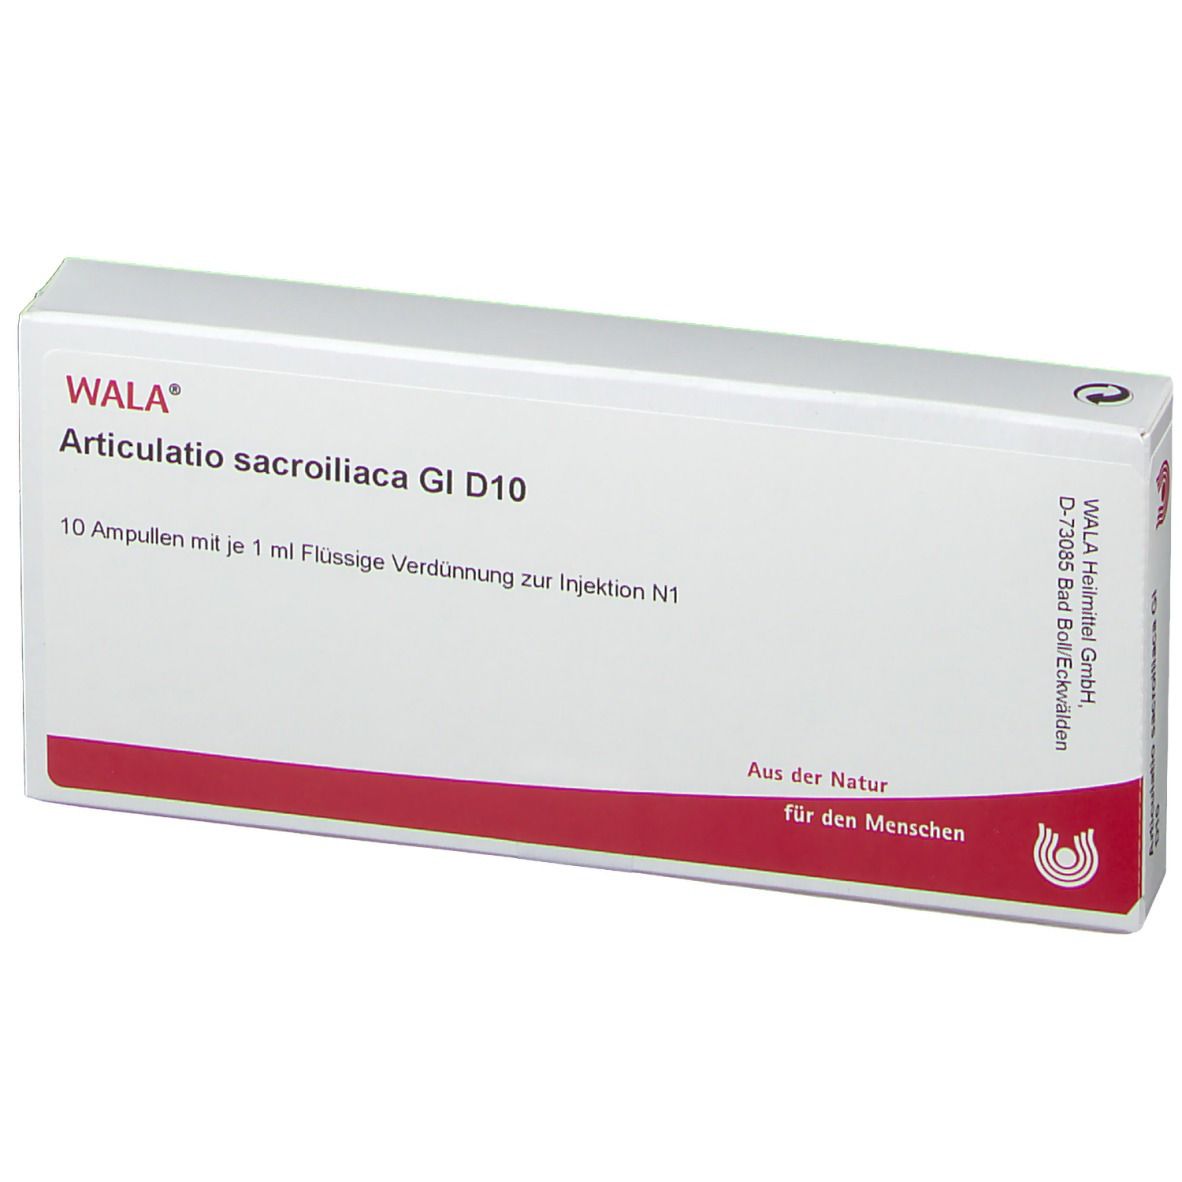 WALA® Articulatio sacroiliaca Gl D 10